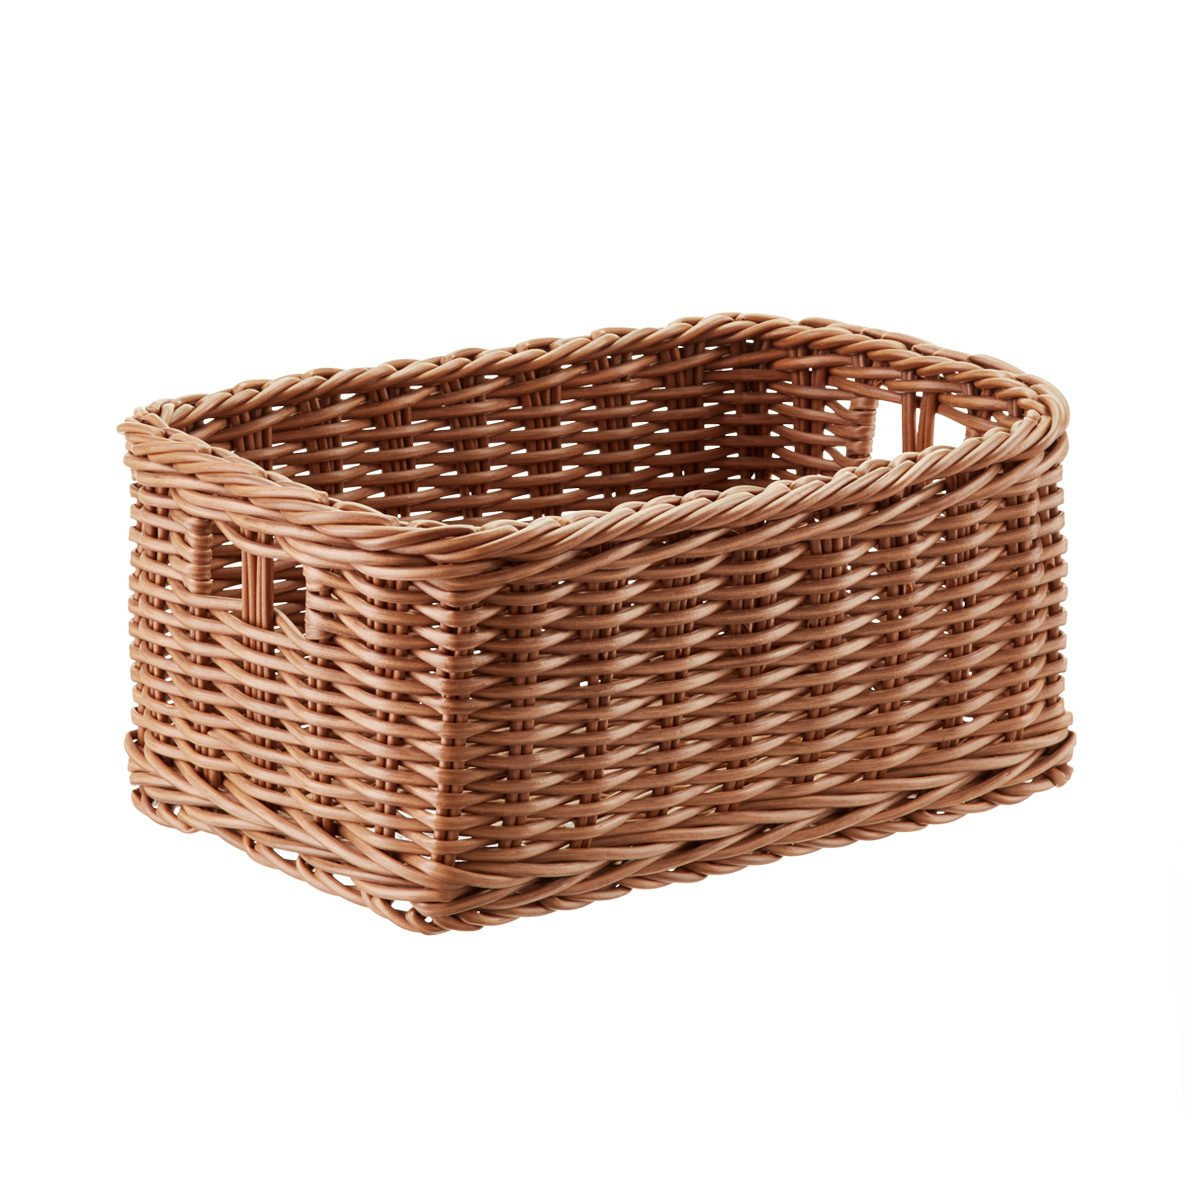 wicker baskets plastic wicker storage bin with handles UDBYJCR